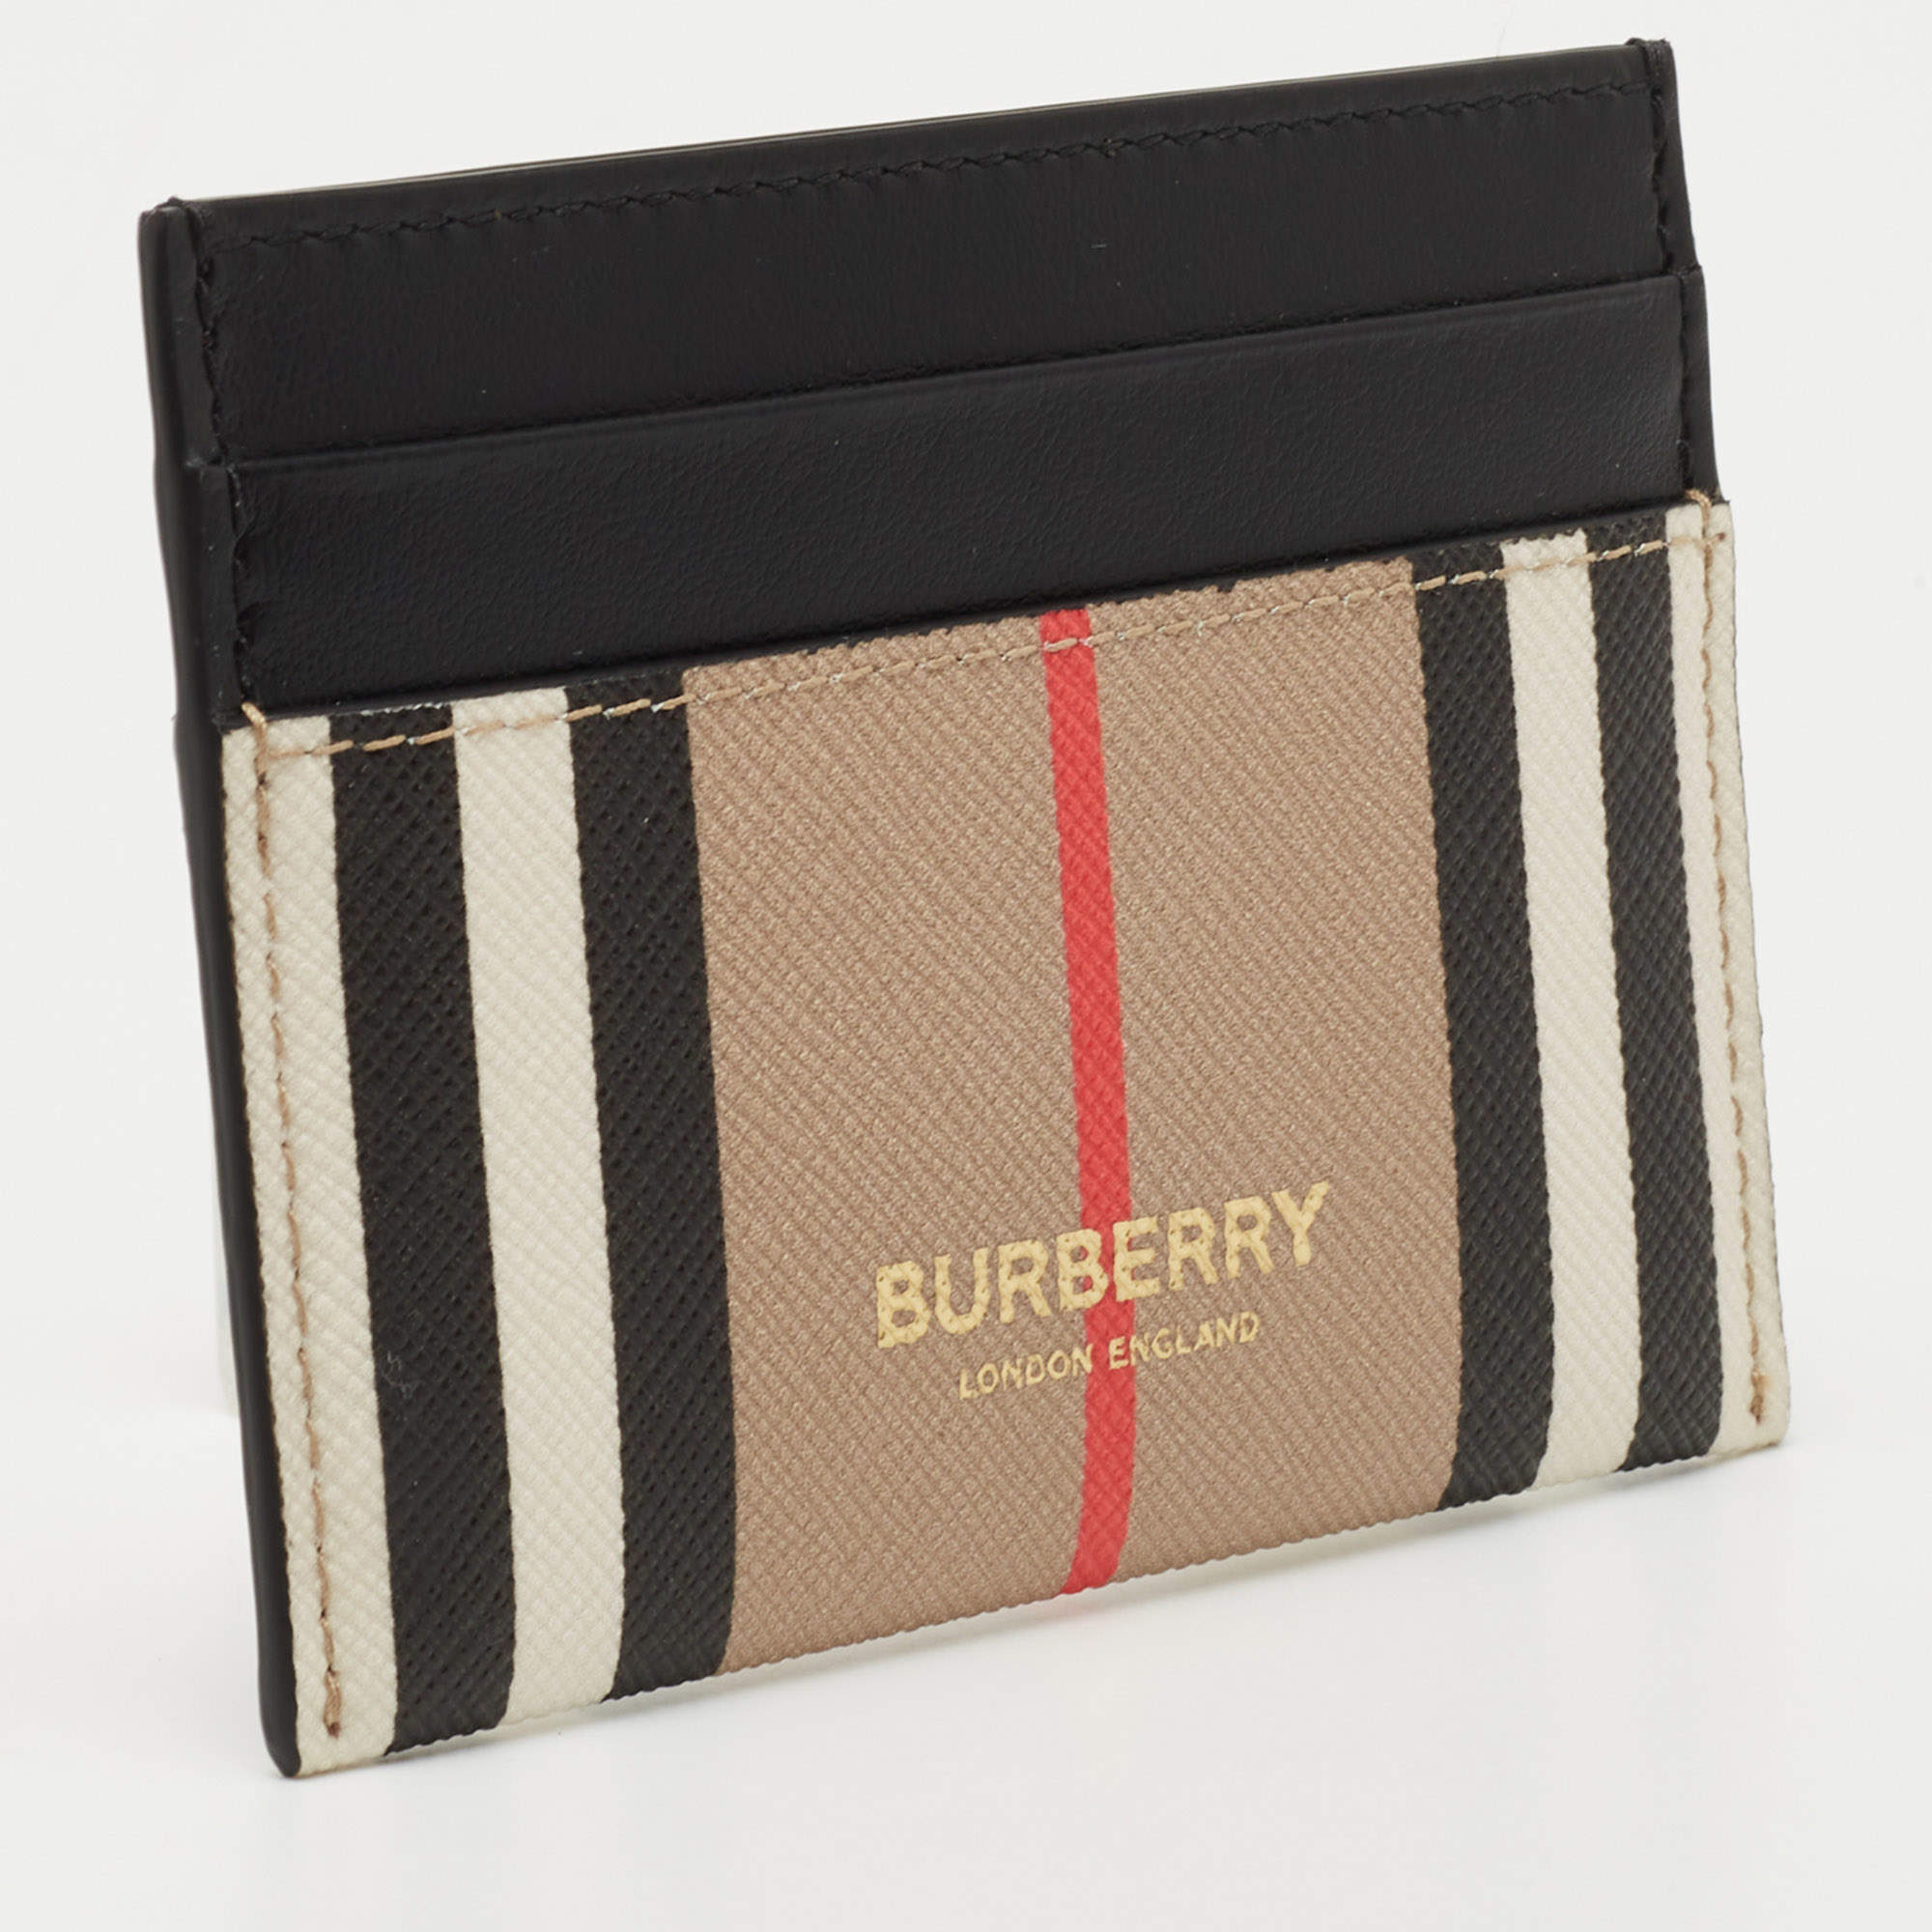 Affordable burberry wallet men For Sale, Wallets & Card Holders